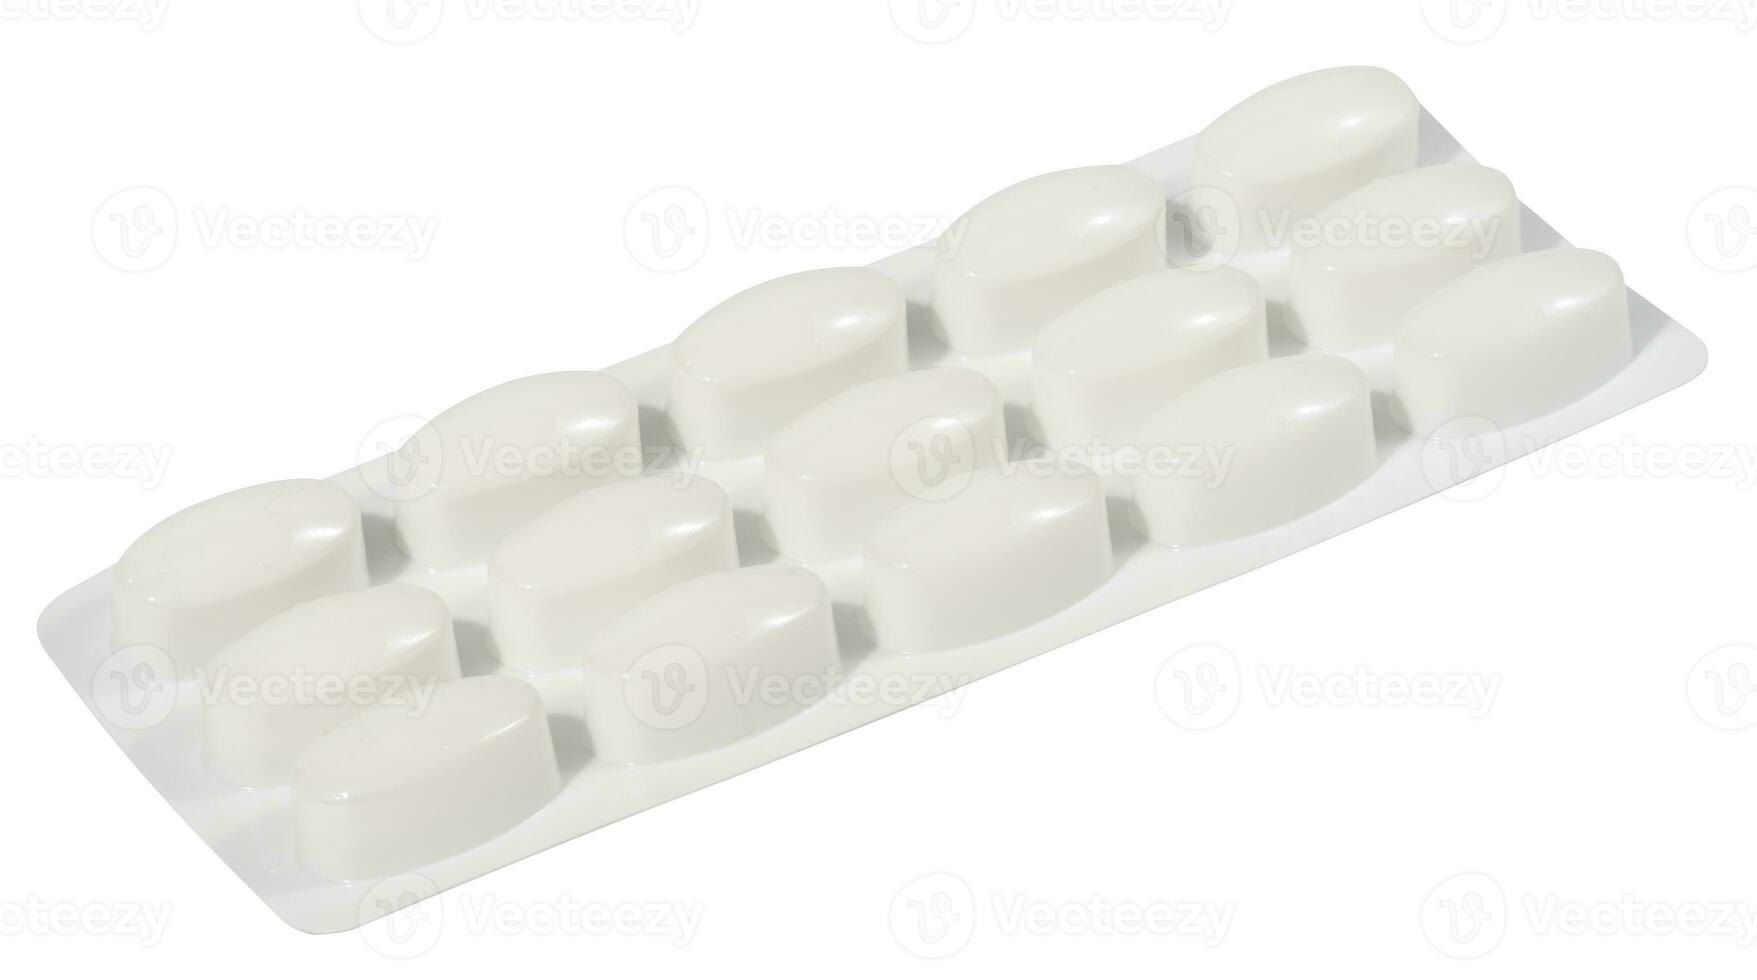 Oval Tablets im Weiß Plastik Verpackung foto